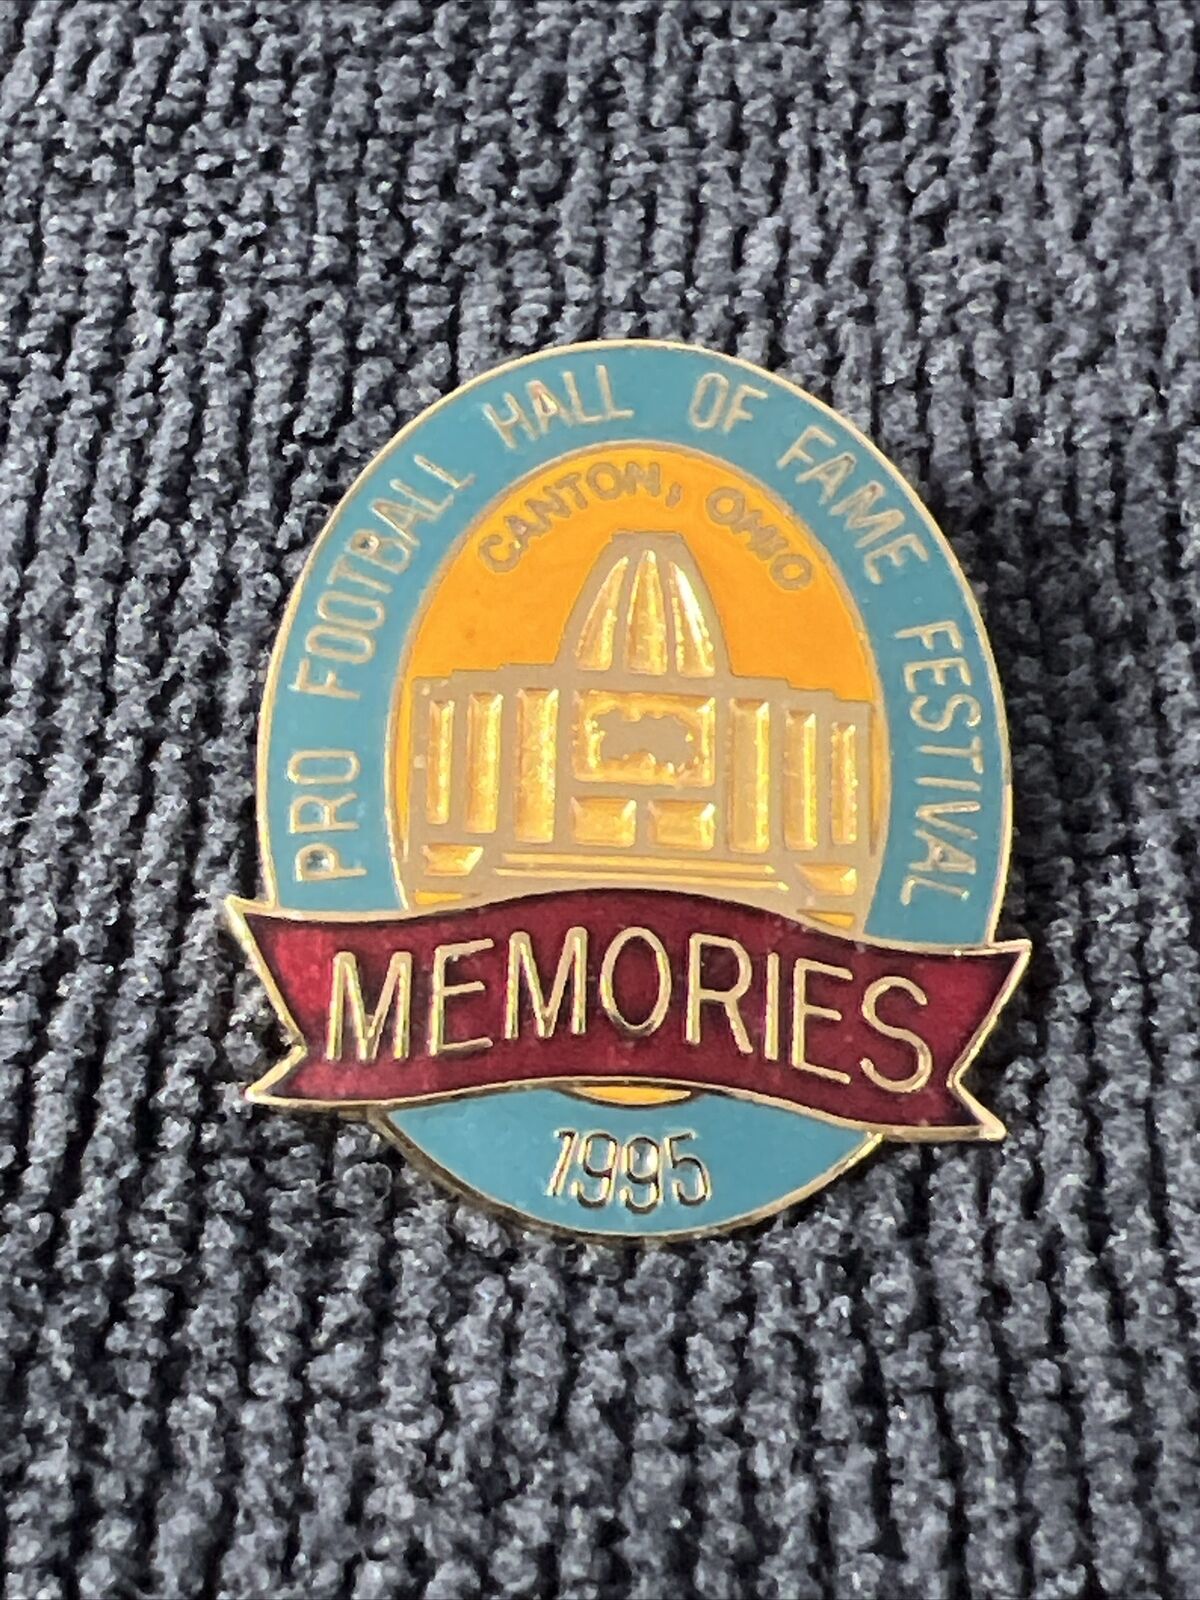 1995 Pro Football Hall Of Fame Festival Pin “Memories”Canton Ohio Enamel Pin